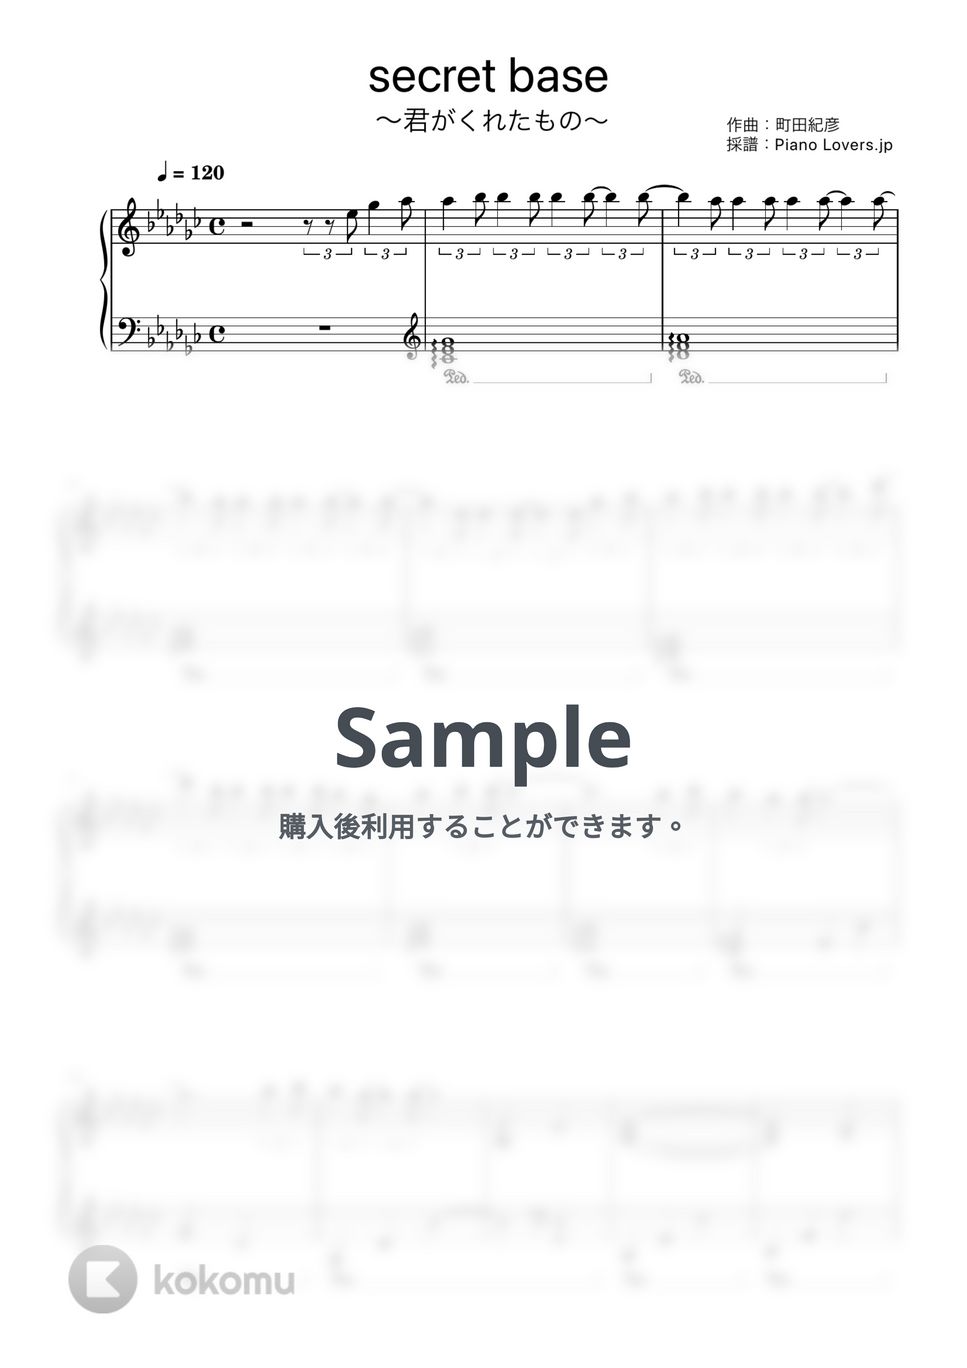 ZONE - secret base〜君がくれたもの〜 (あの花 / ピアノ楽譜 / 中級) by Piano Lovers. jp